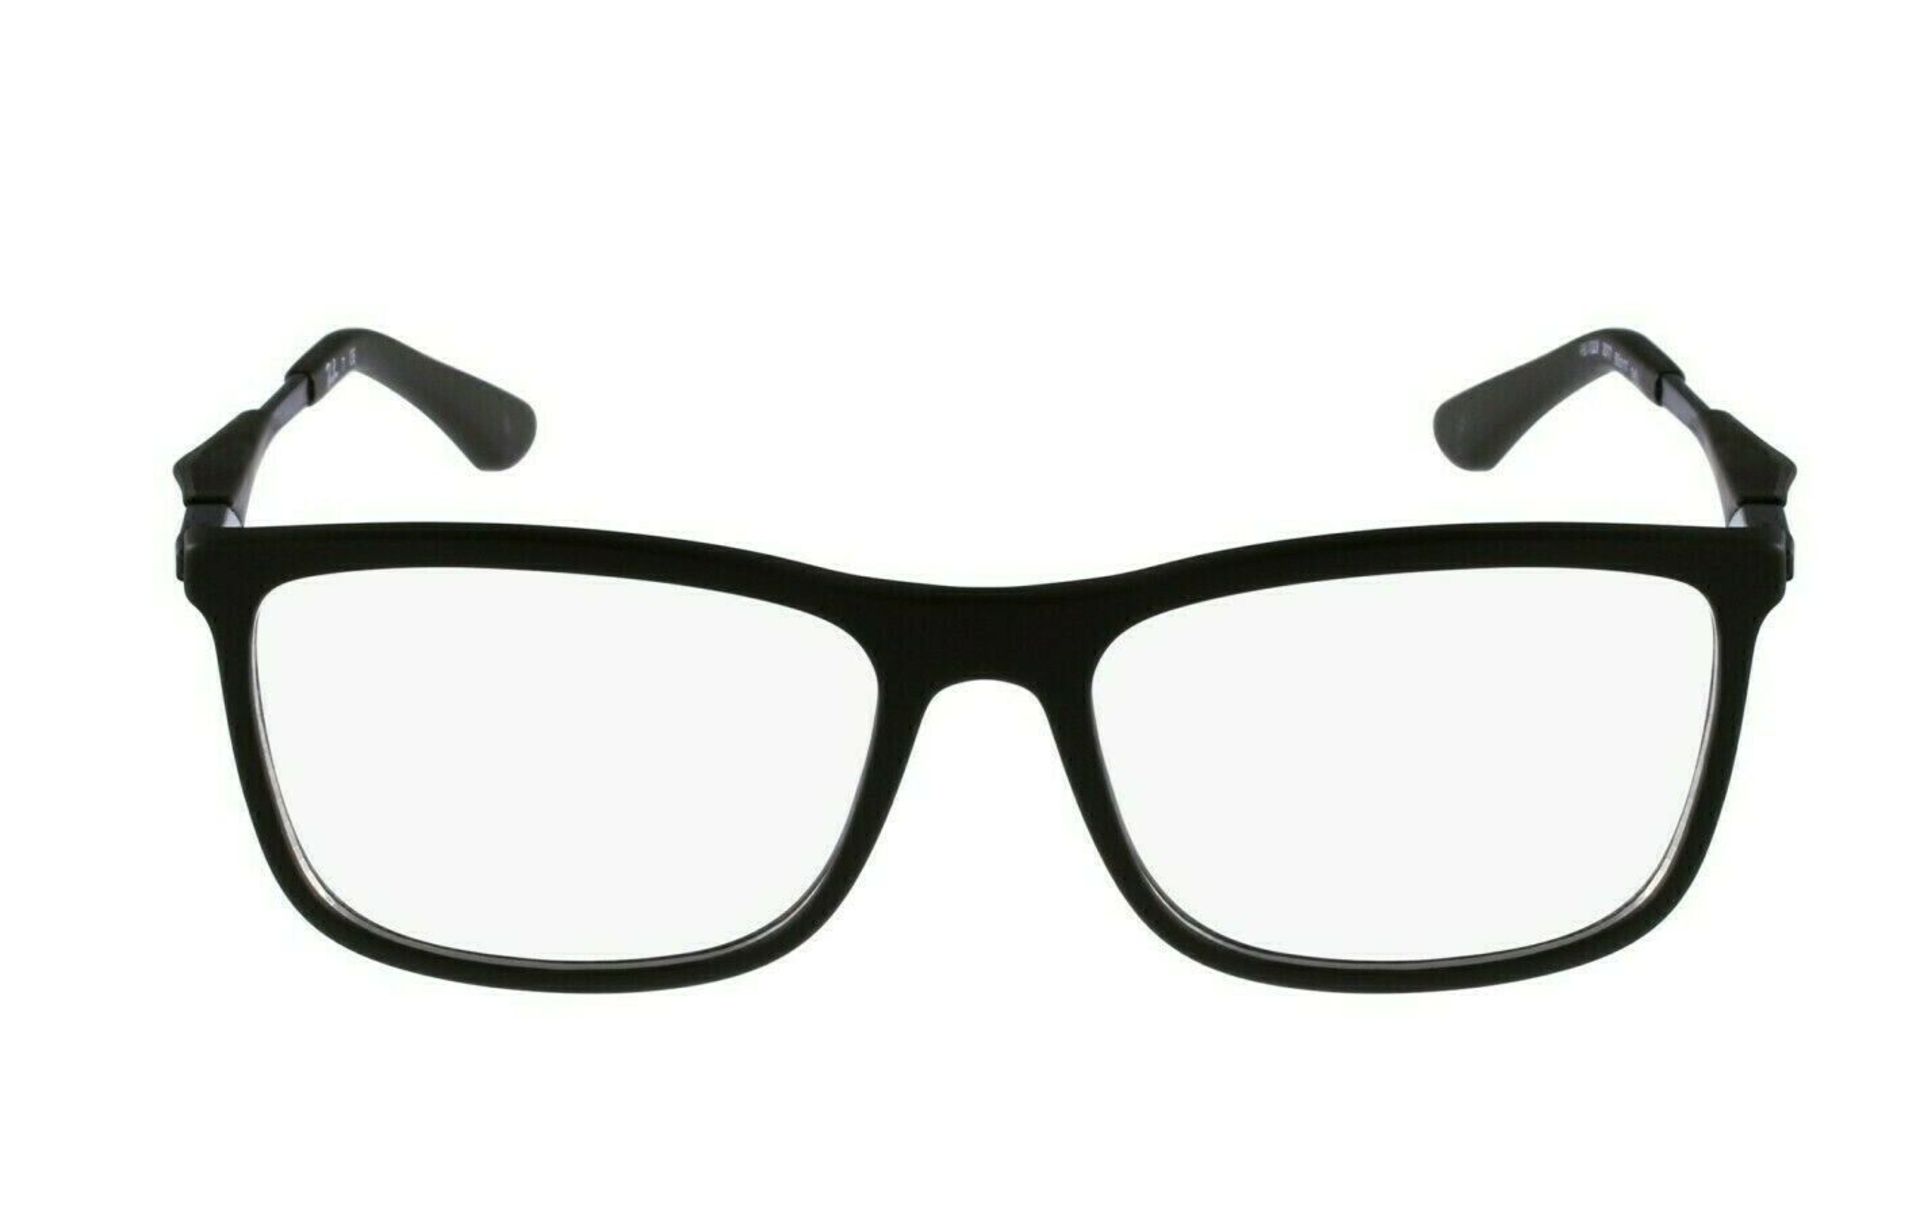 Rayban 53mm Matte Black Eyeglasses RB7029 2077 - Image 2 of 2